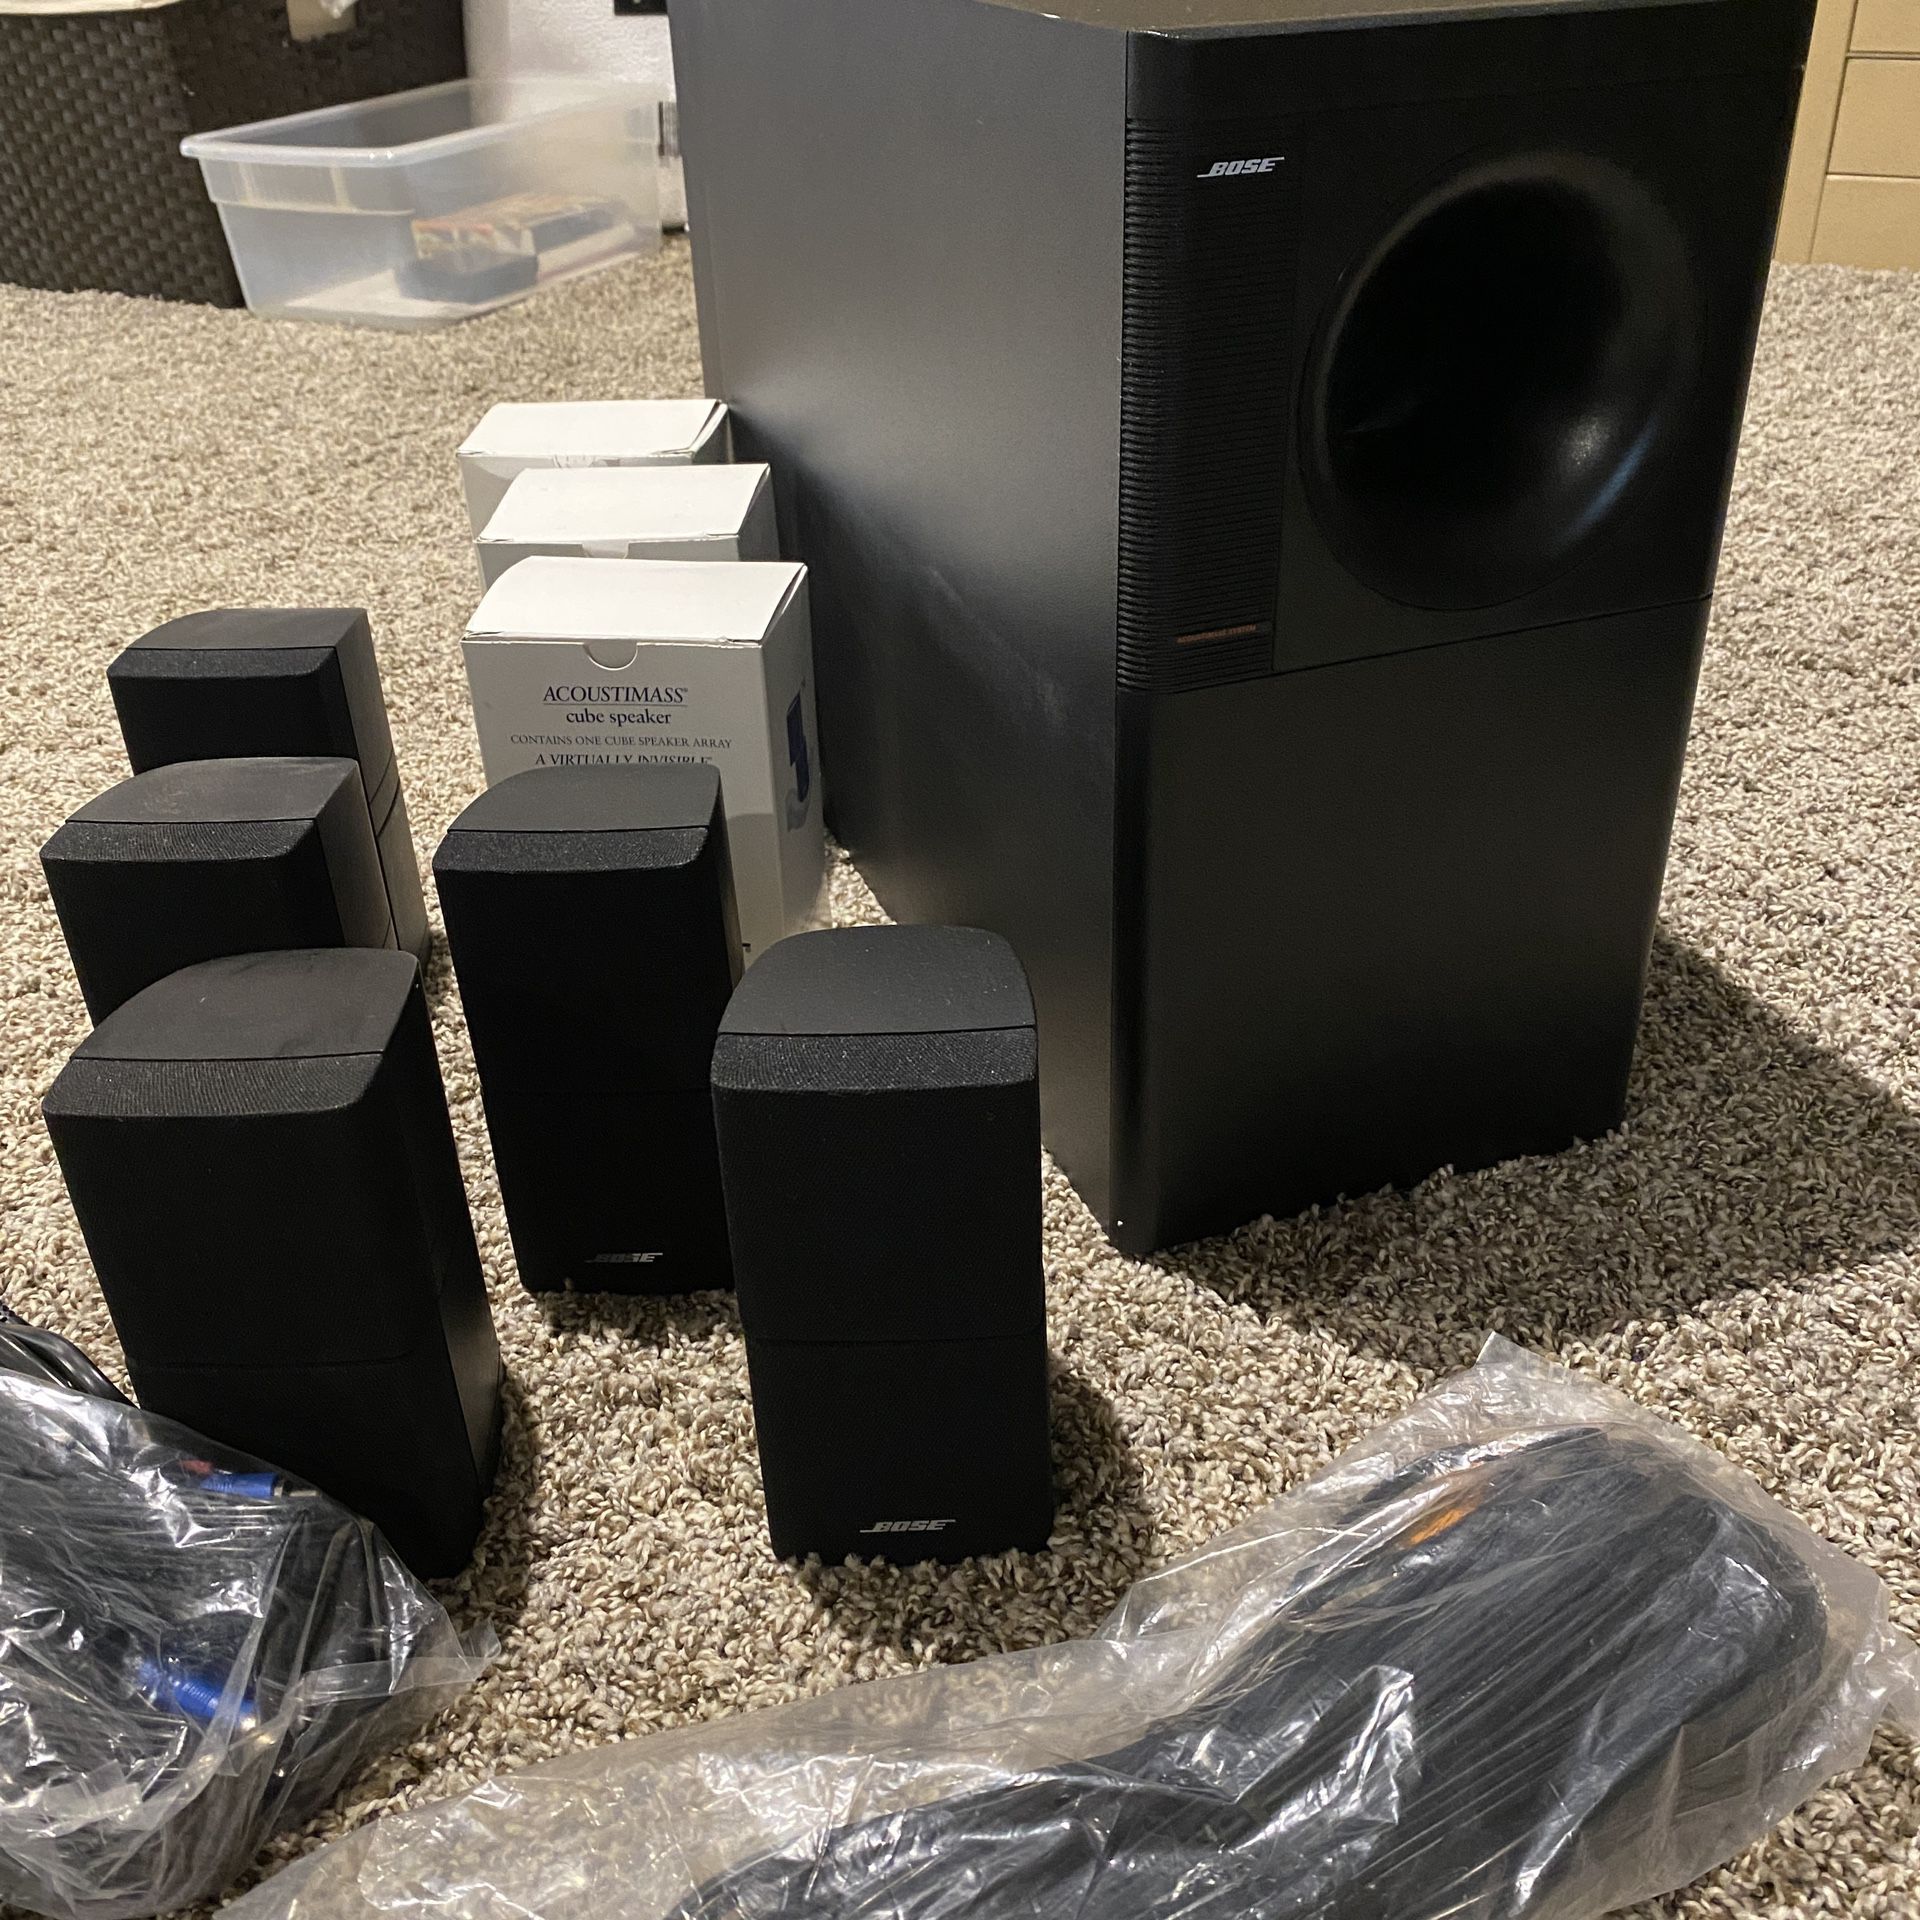 Bose Acoustimass 15 Speakers - Complete Set - 5.1 Speaker System